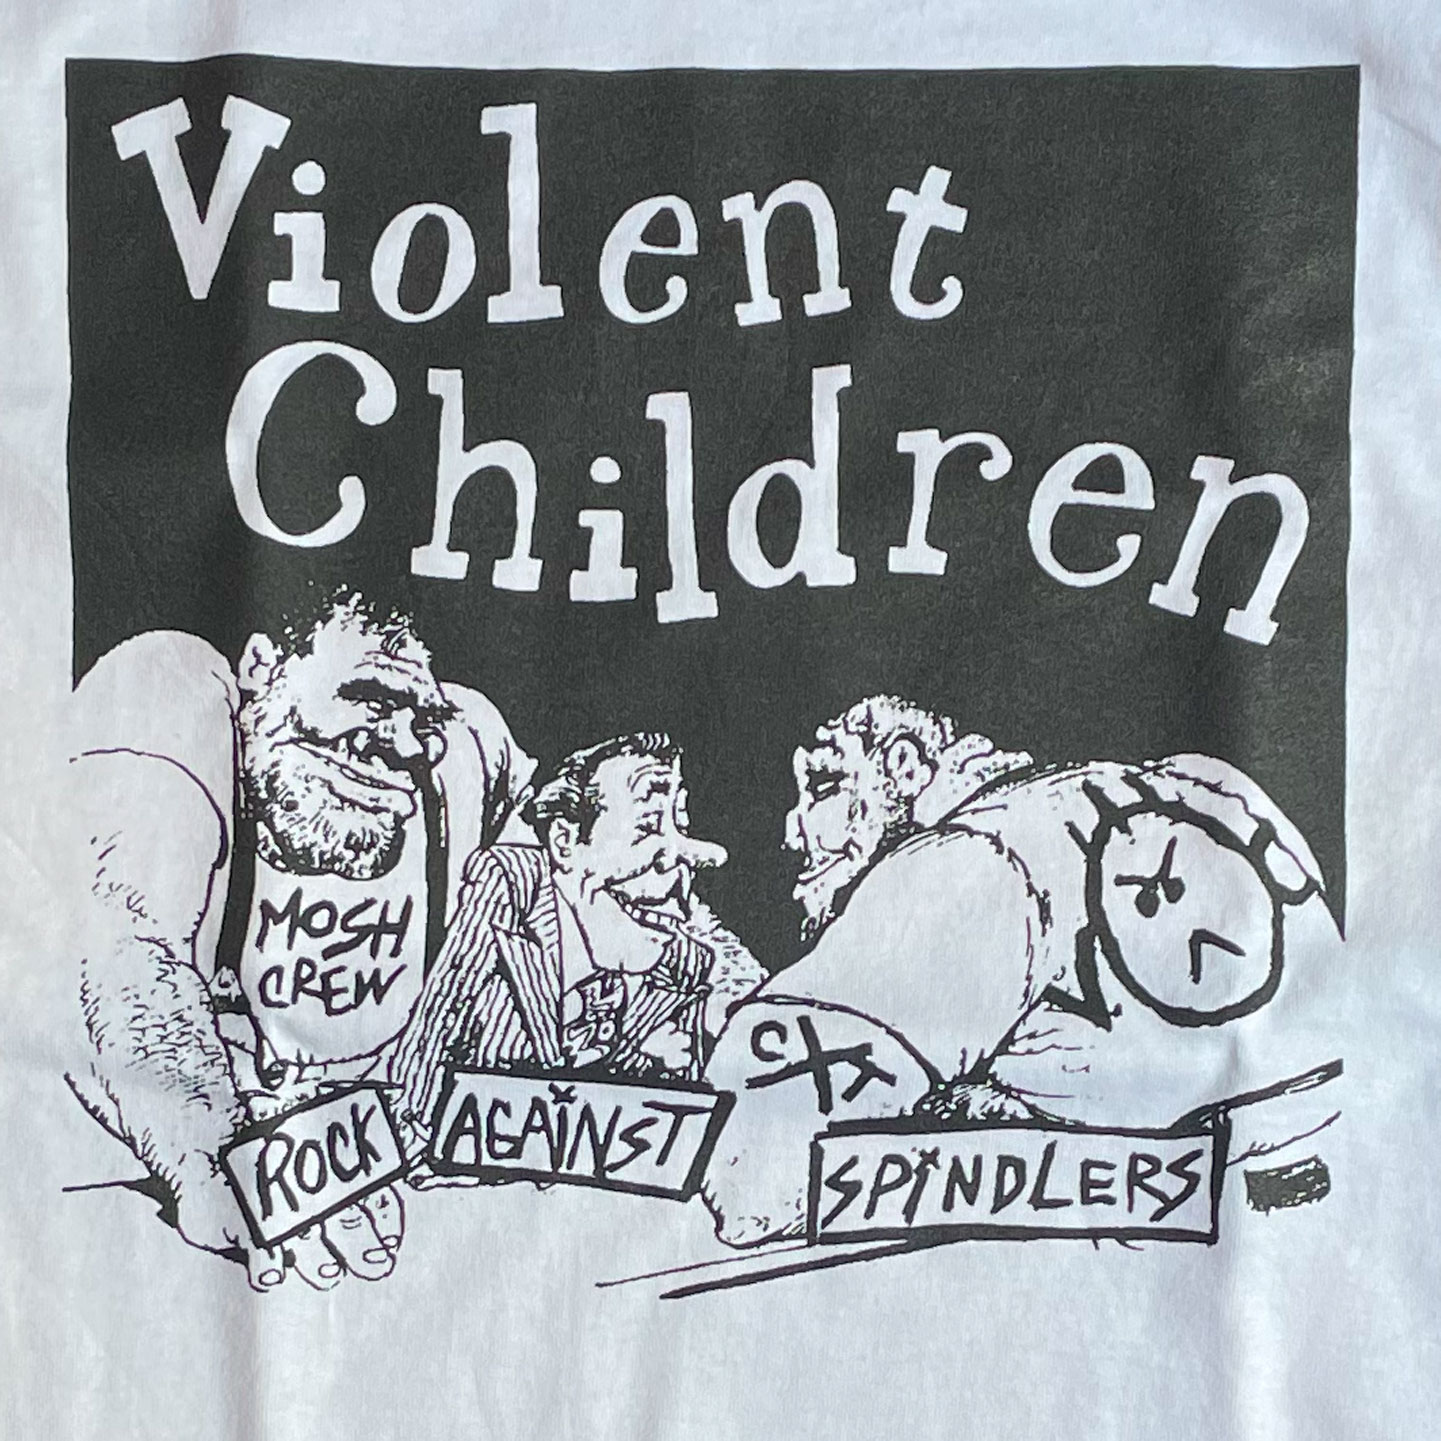 VIOLENT CHILDREN Tシャツ